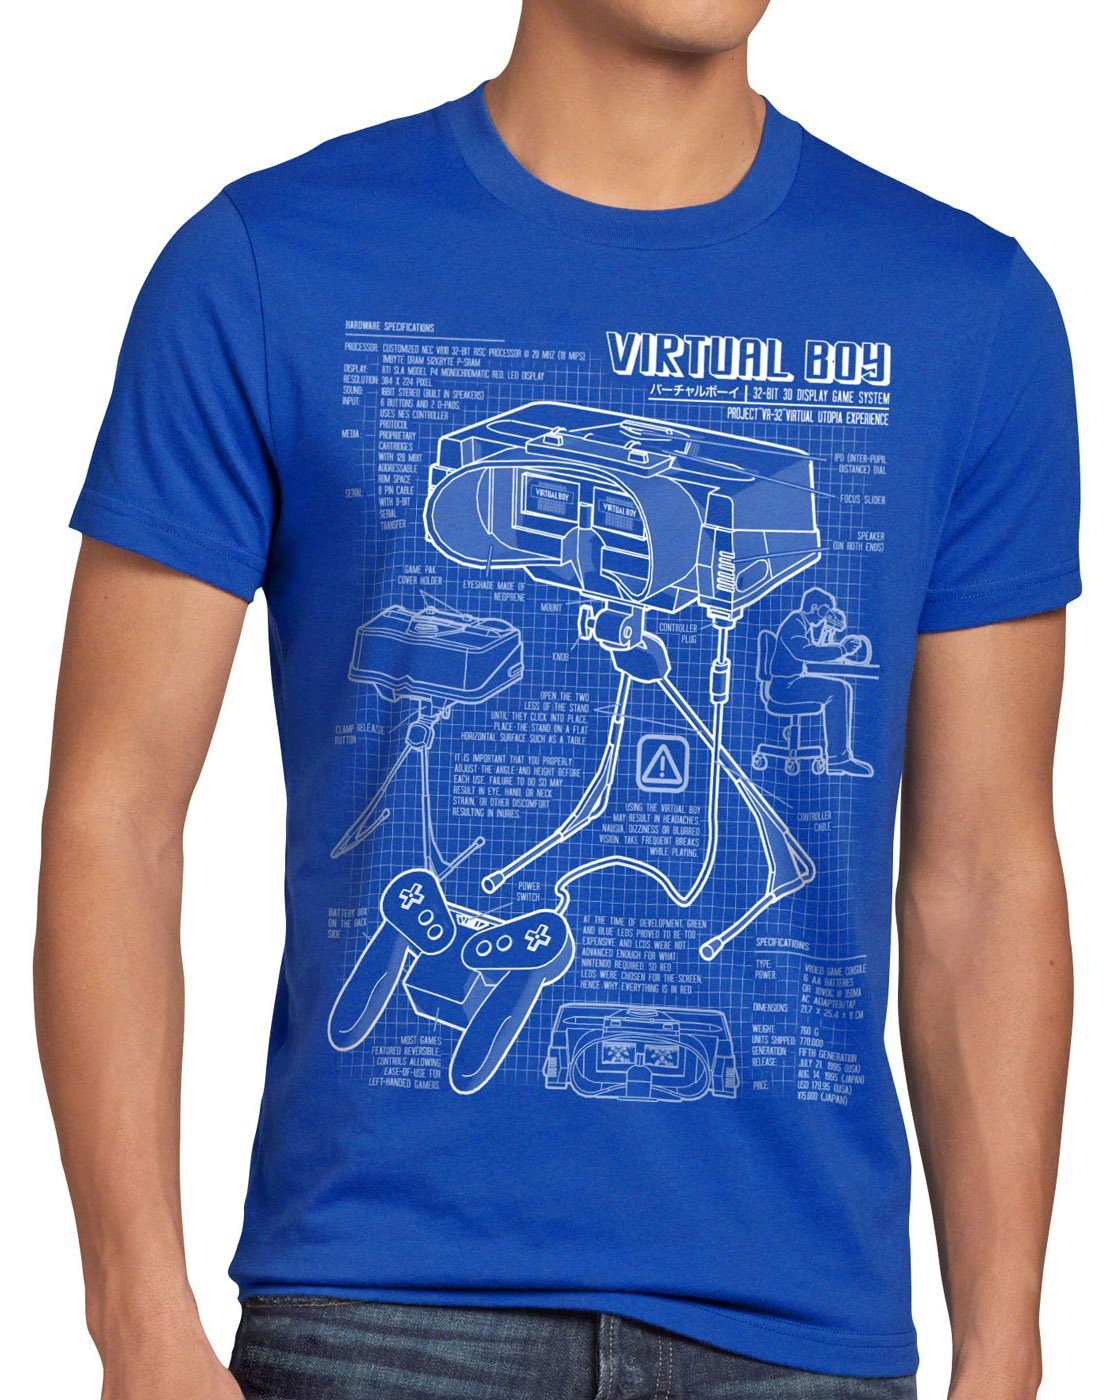 videospiel nes Herren n64 T-Shirt blau Boy nintendo gamer 32Bit konsole super Print-Shirt style3 Virtual